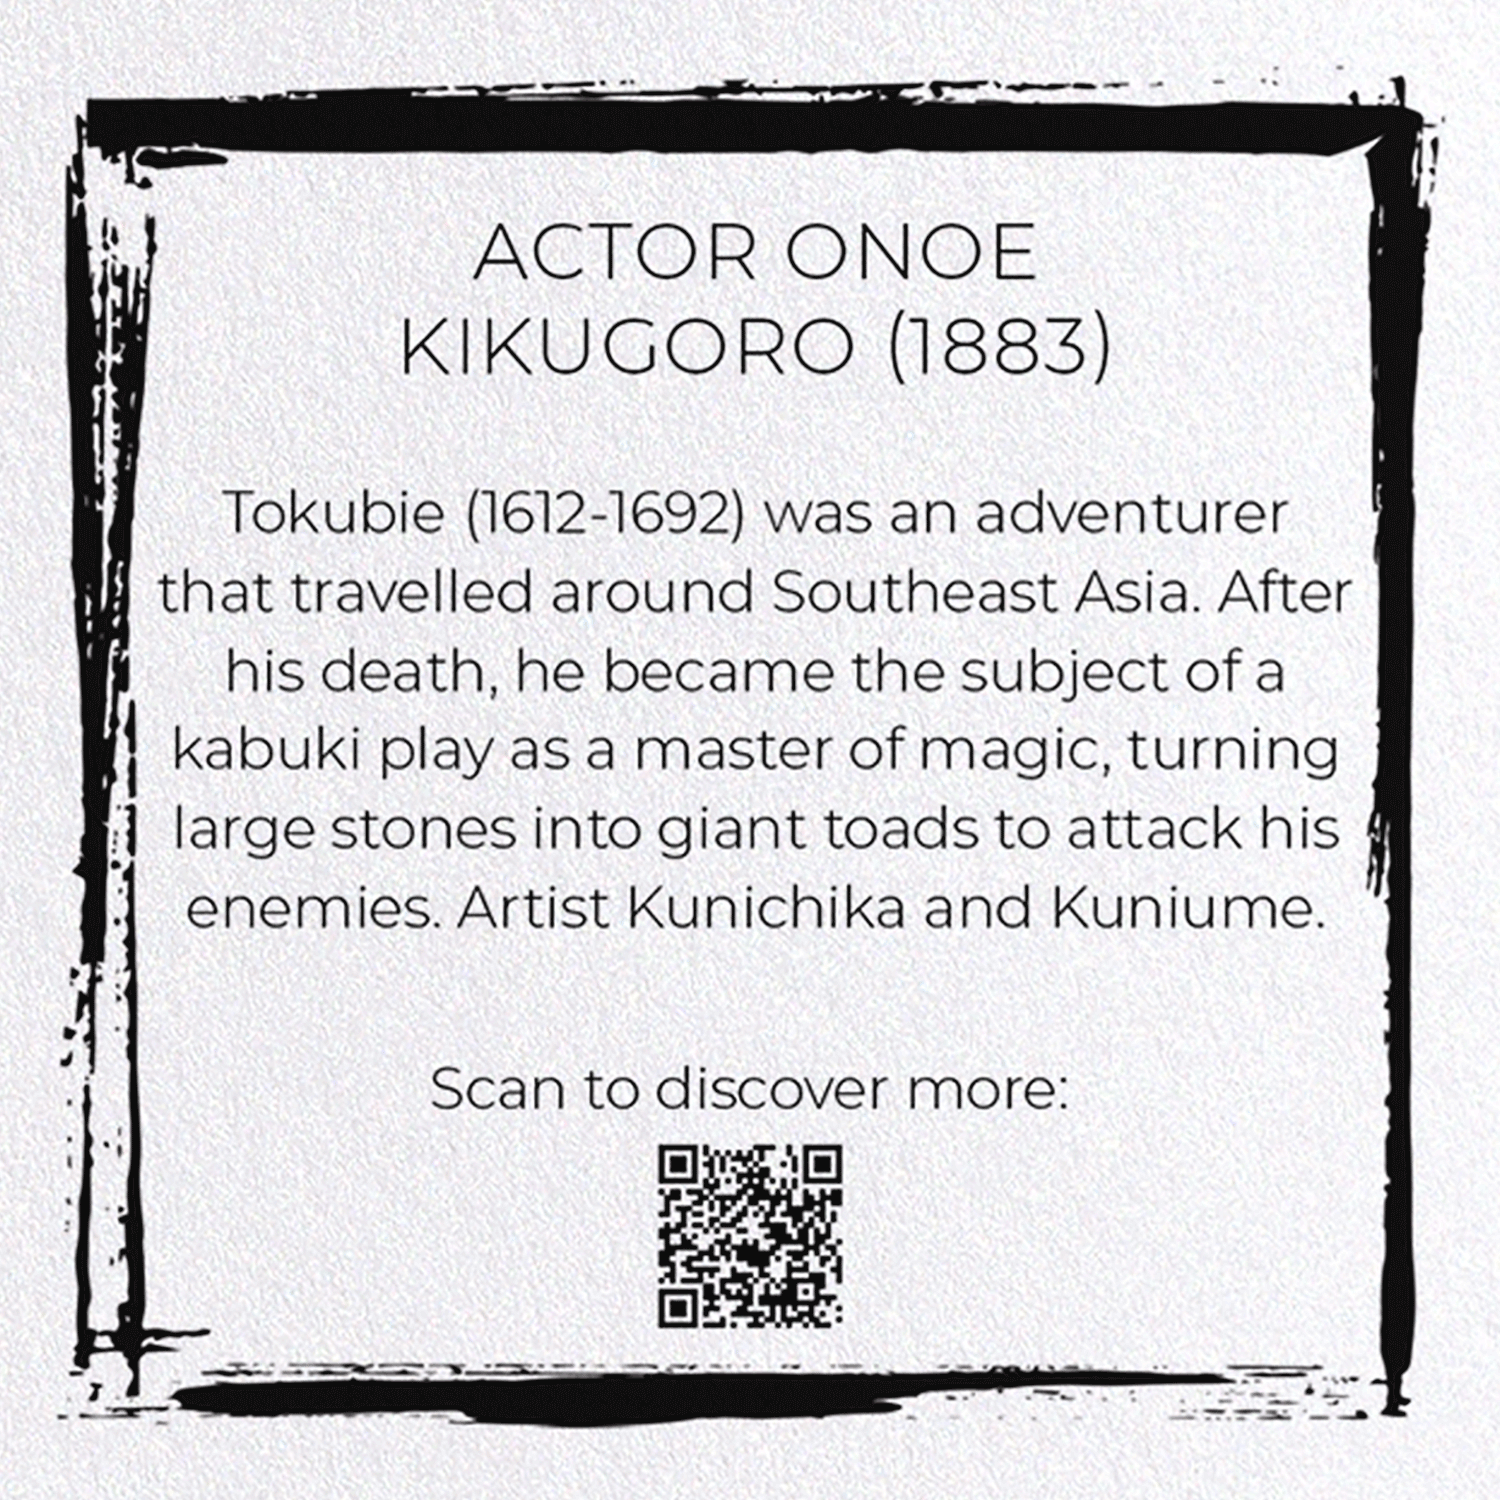 ACTOR ONOE KIKUGORO (1883): Japanese Greeting Card